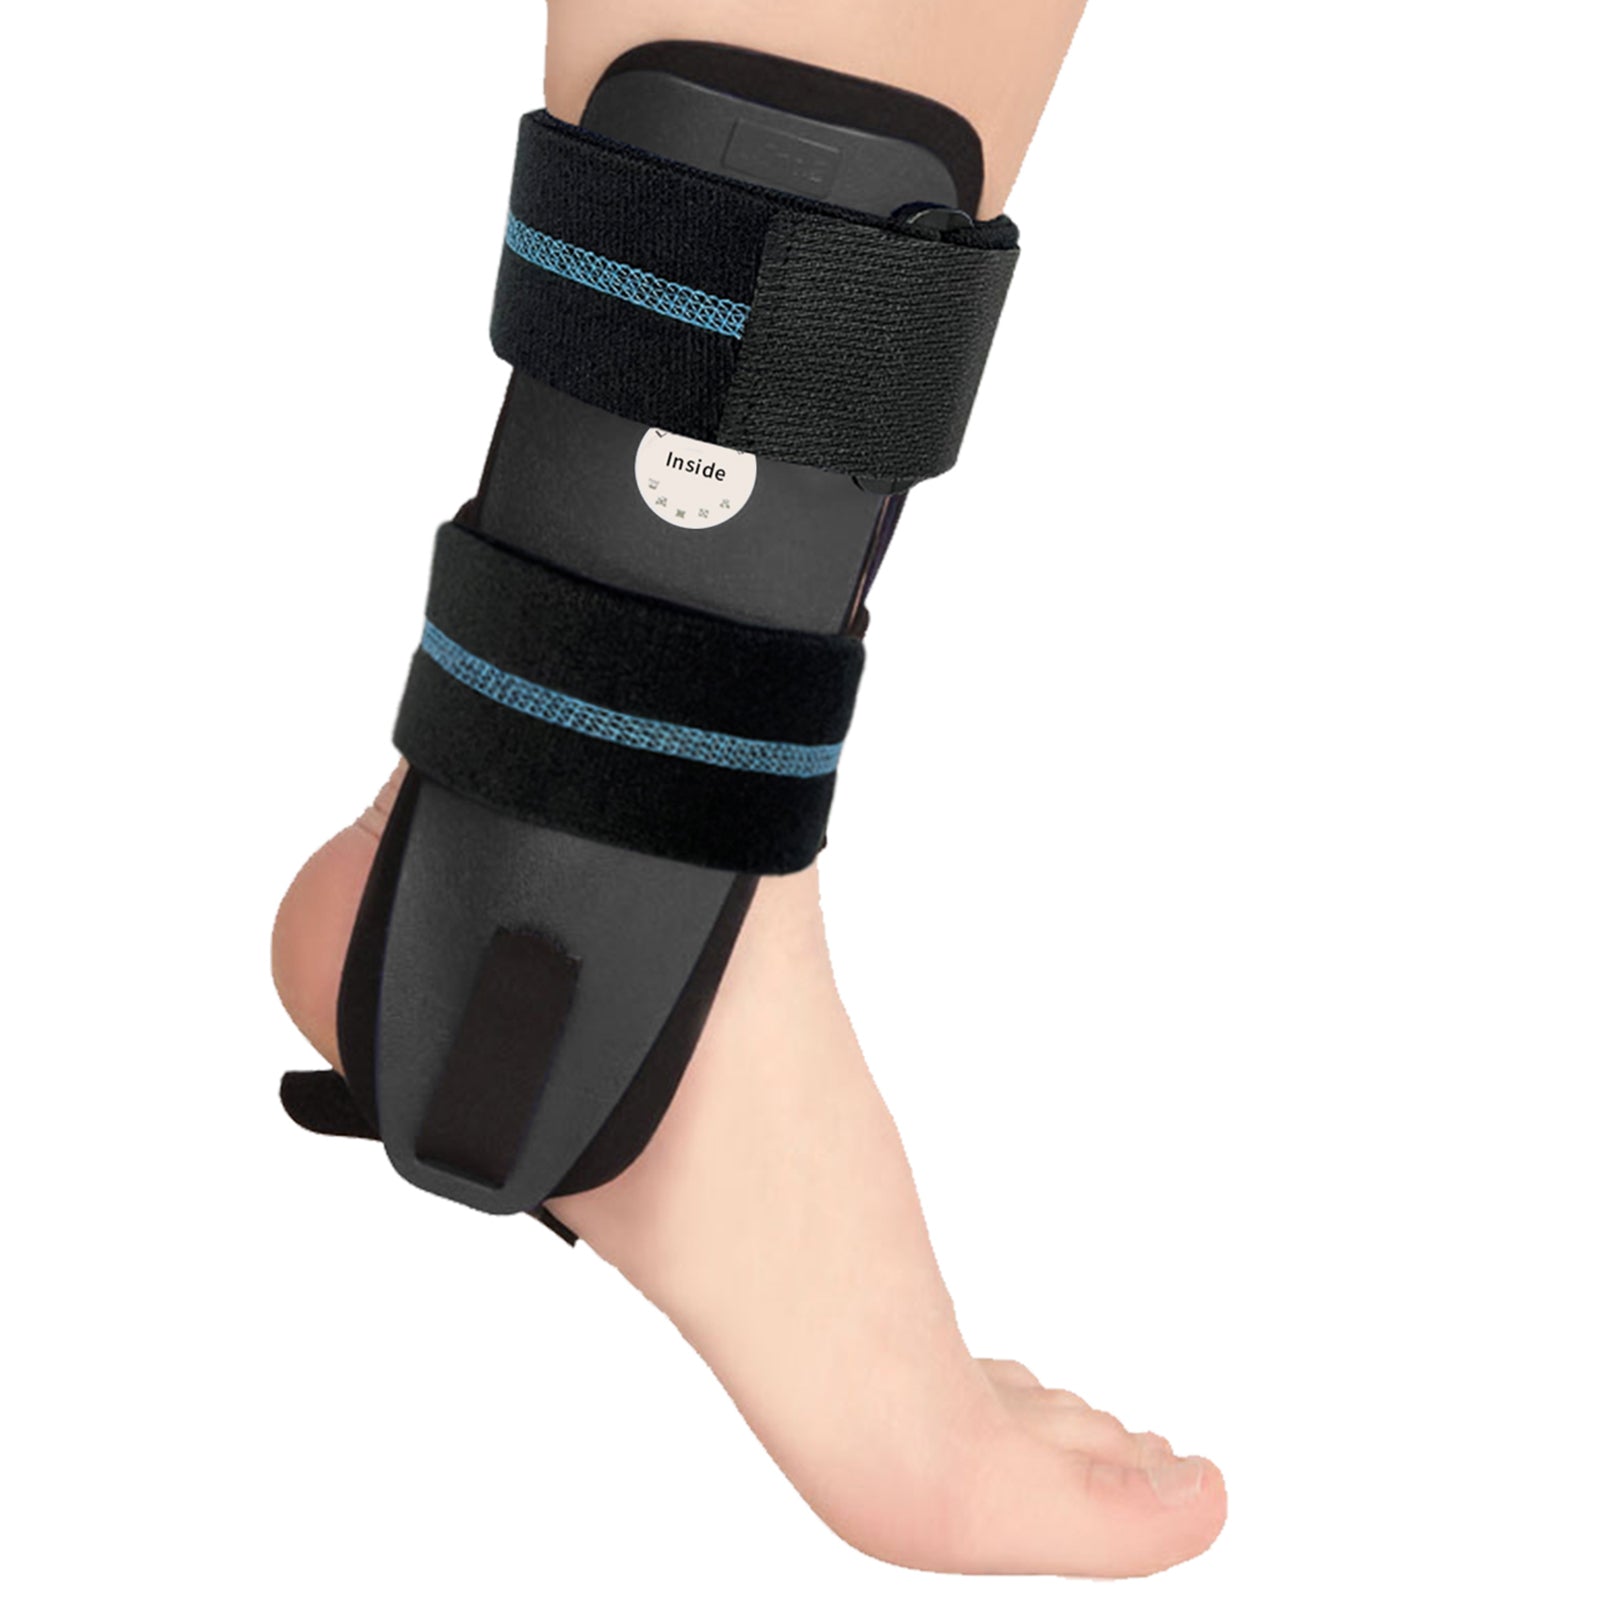 VP1501 VELPEAU Ankle Brace Stirrup Ankle Splint Adjustable Rigid Stabilizer for Sprains-Foam Pads Version